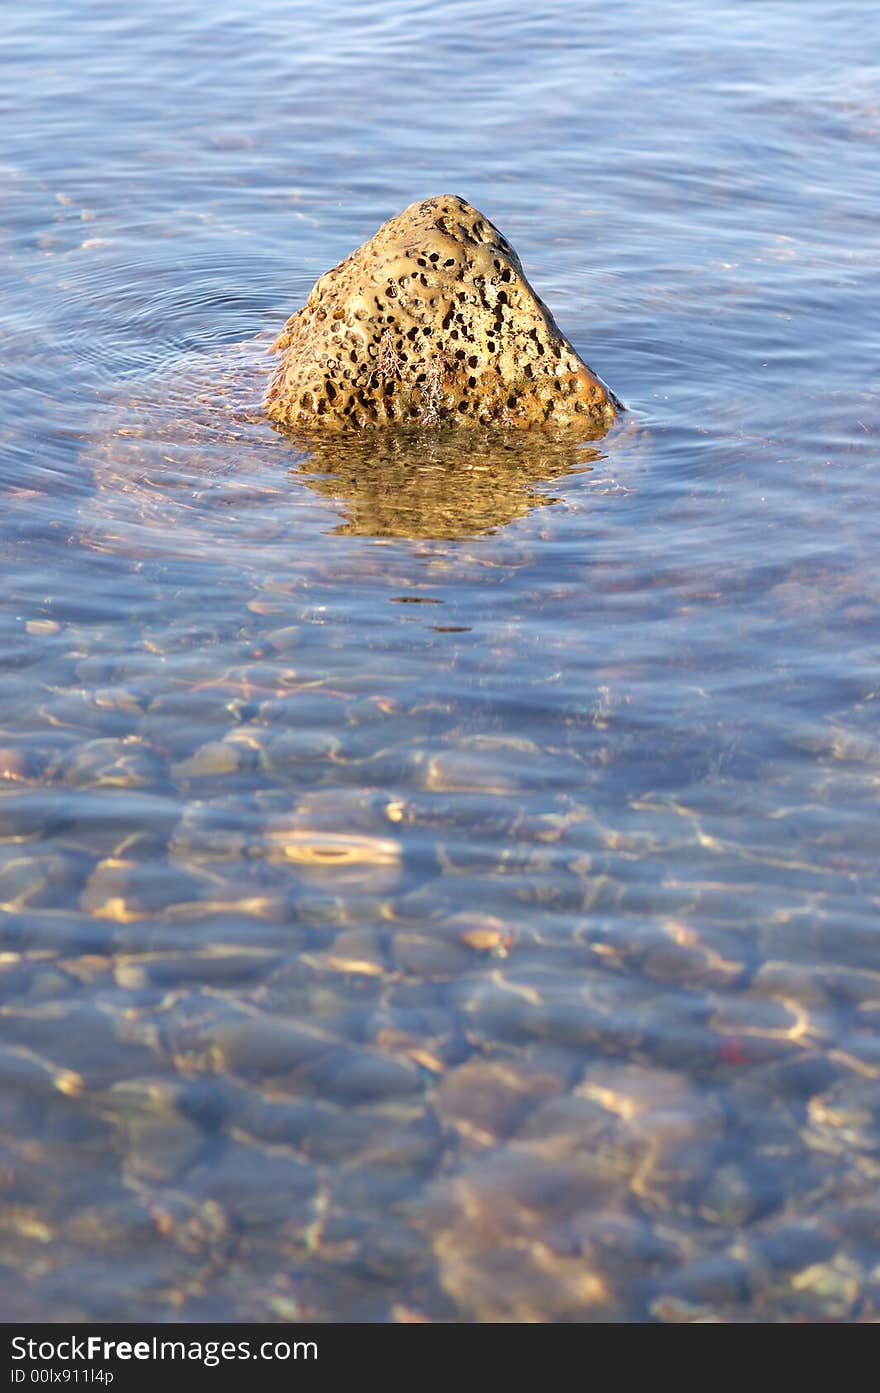 Piramide rock on the shoal-water. Piramide rock on the shoal-water